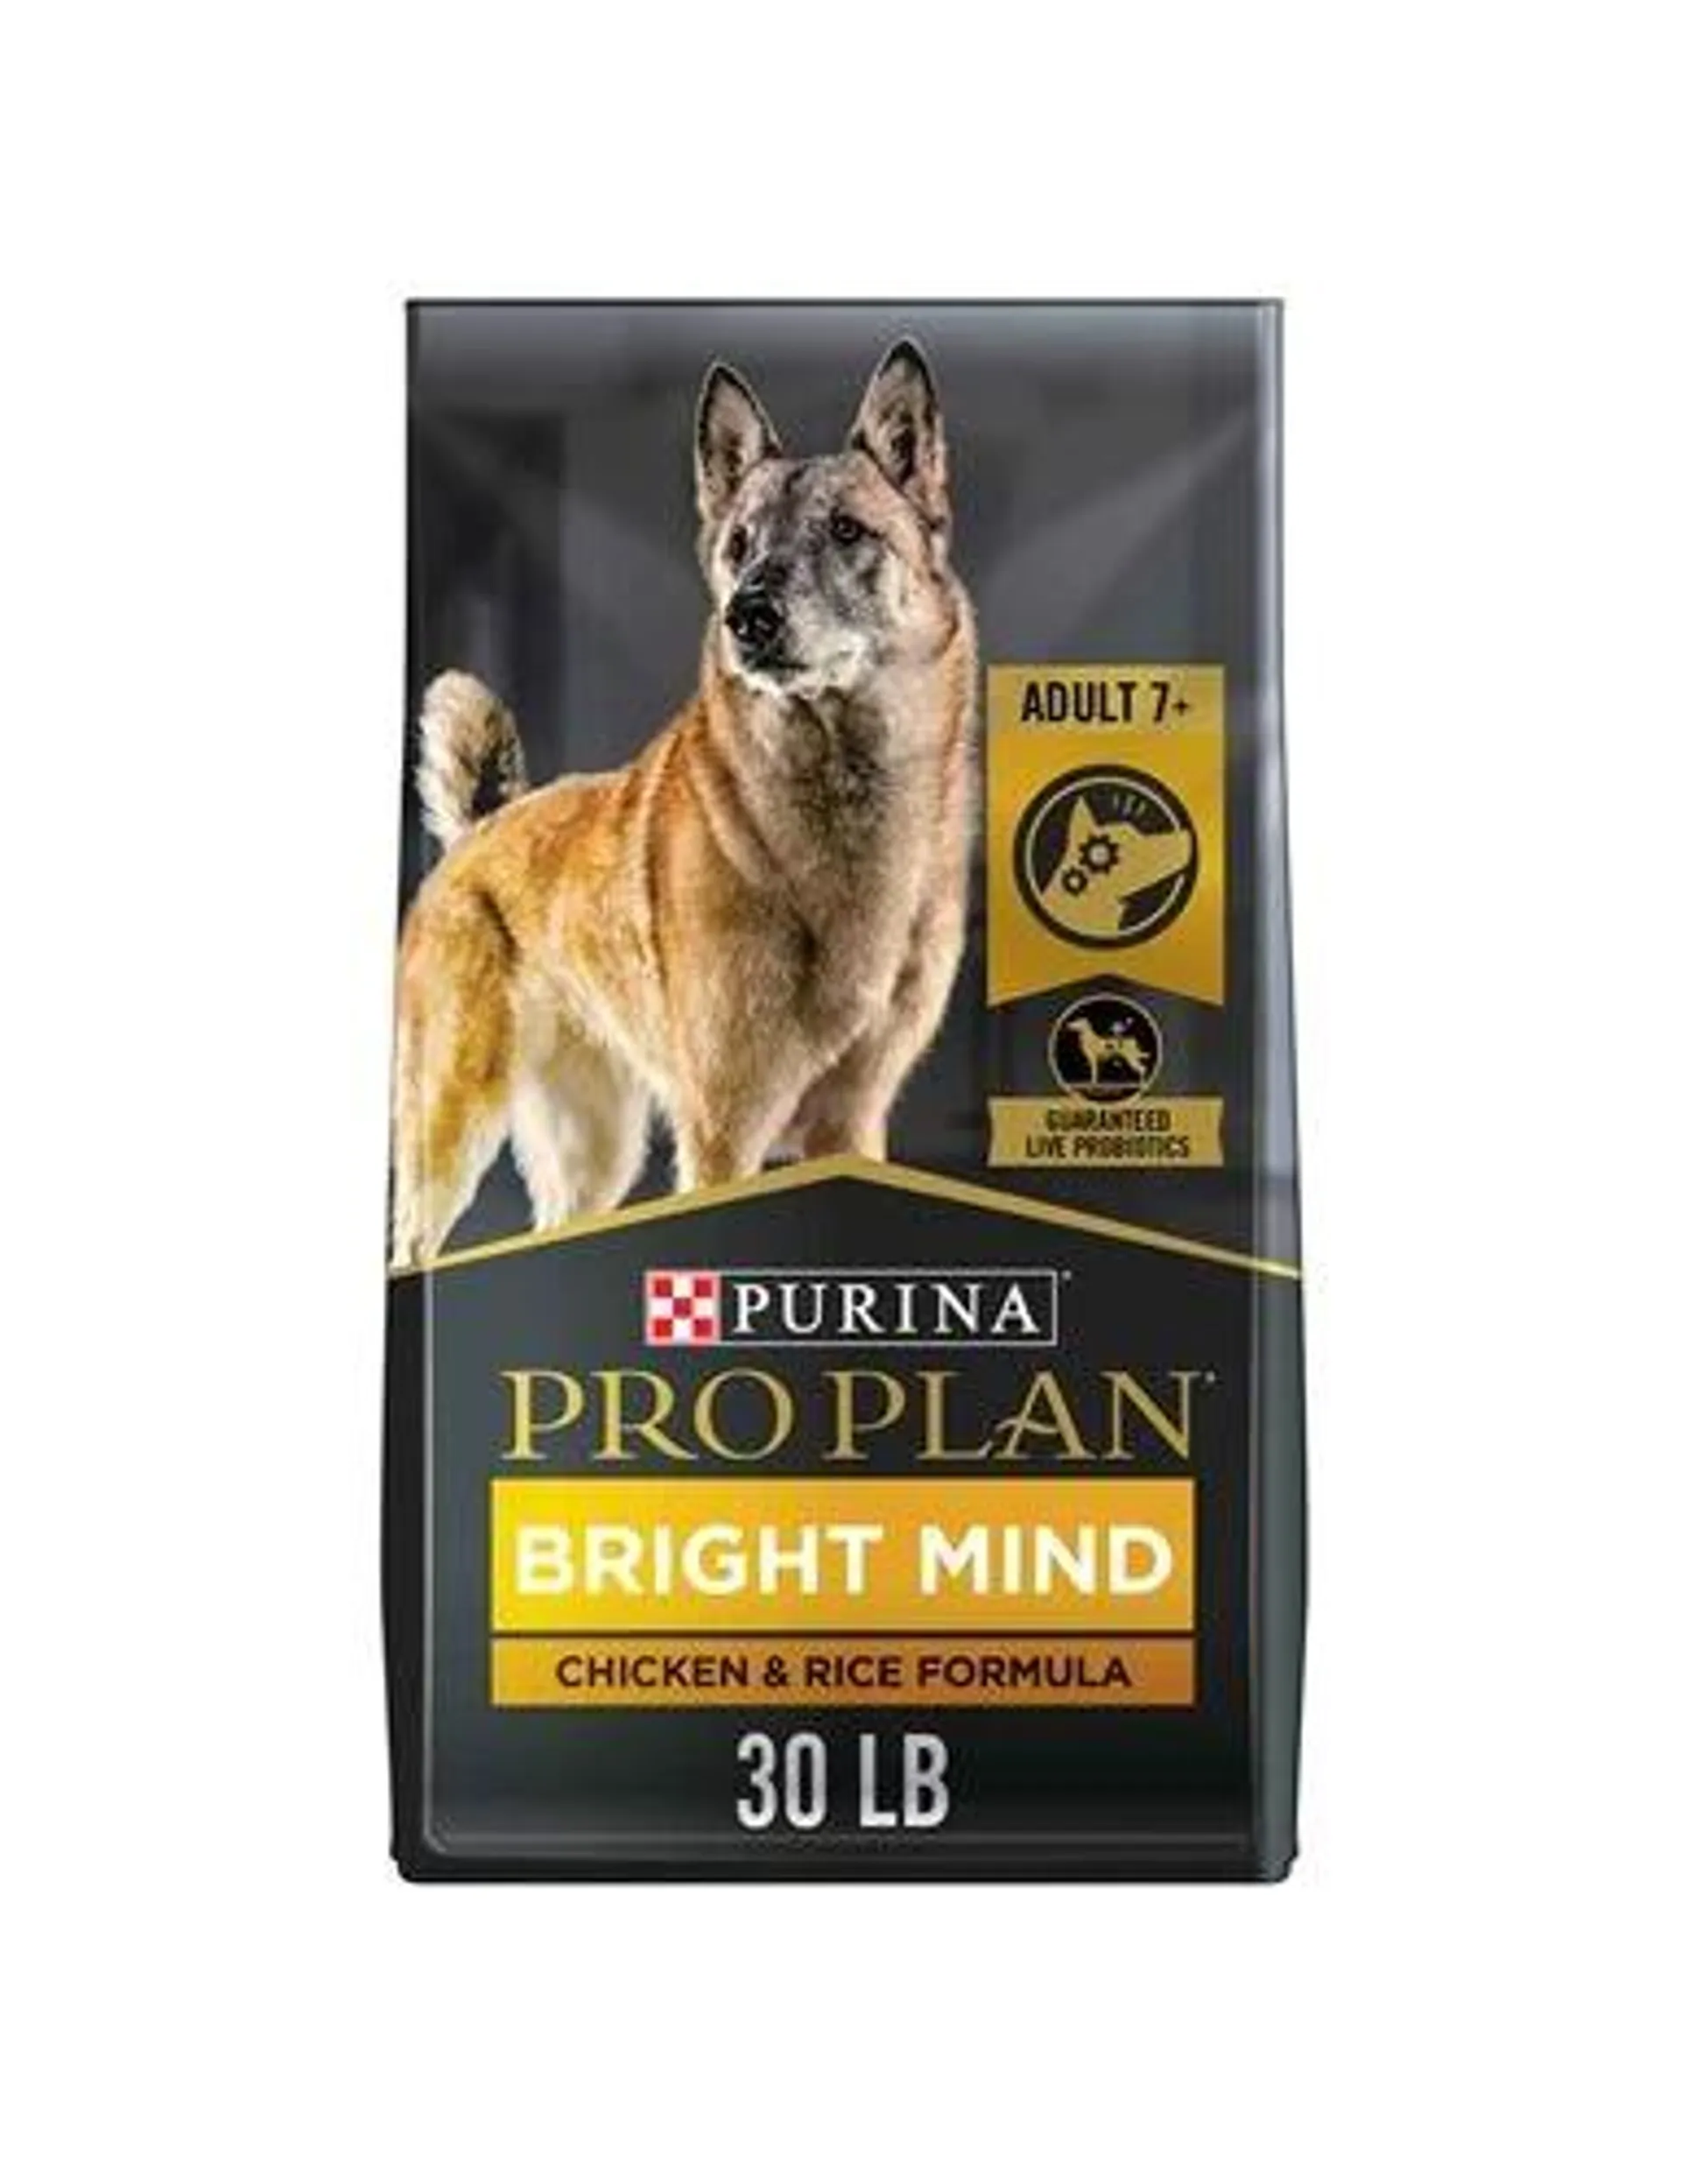 Purina Pro Plan Senior Dog Food With Probiotics for Dogs, Bright Mind 7+ Chicken & Rice Formula - 30 Pound Bag